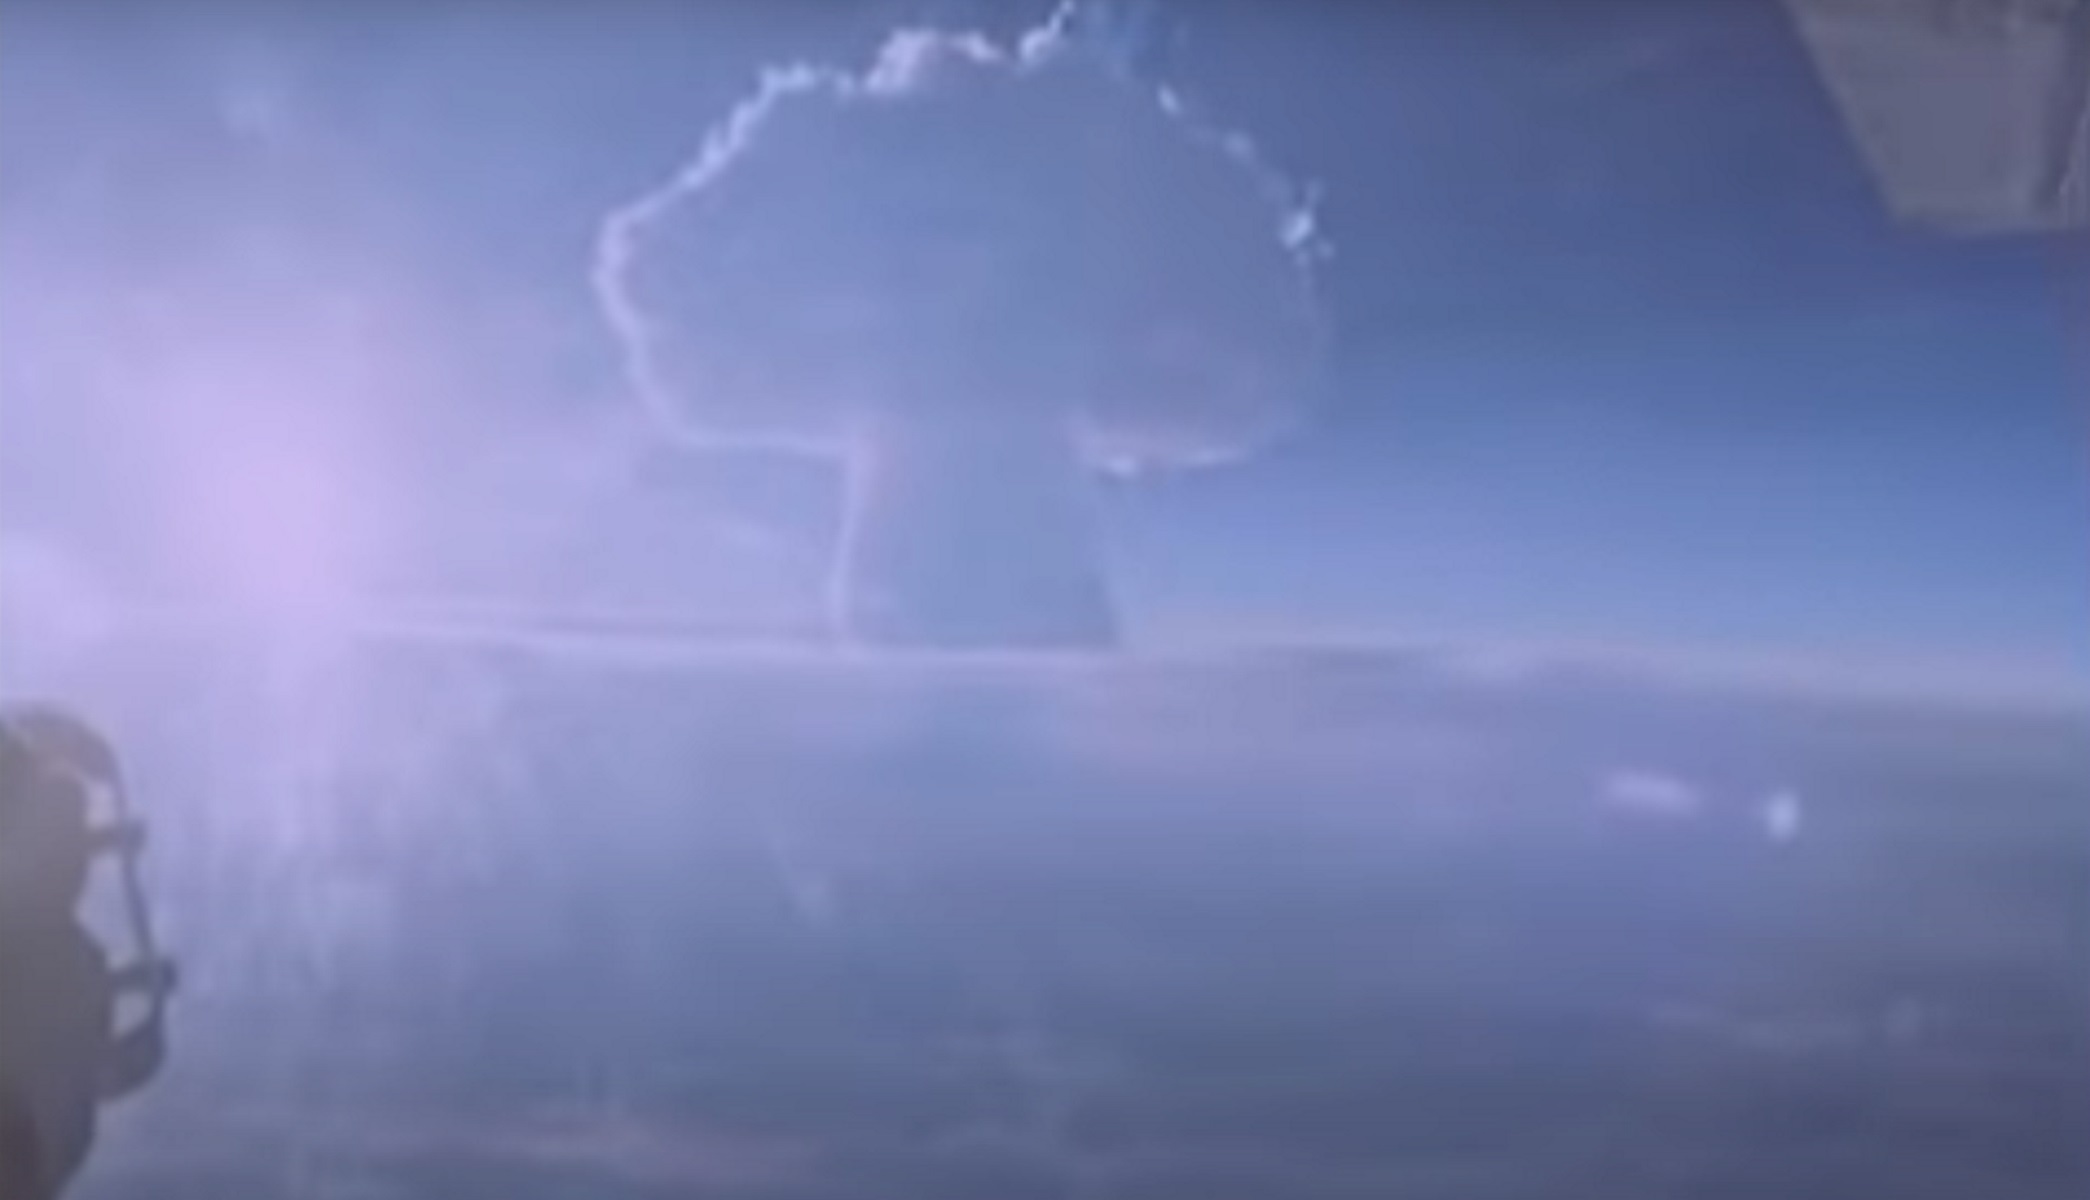 Tsar bomba: Βίντεο ντοκουμέντο από την έκρηξη της μεγαλύτερης βόμβας υδρογόνου στον κόσμο